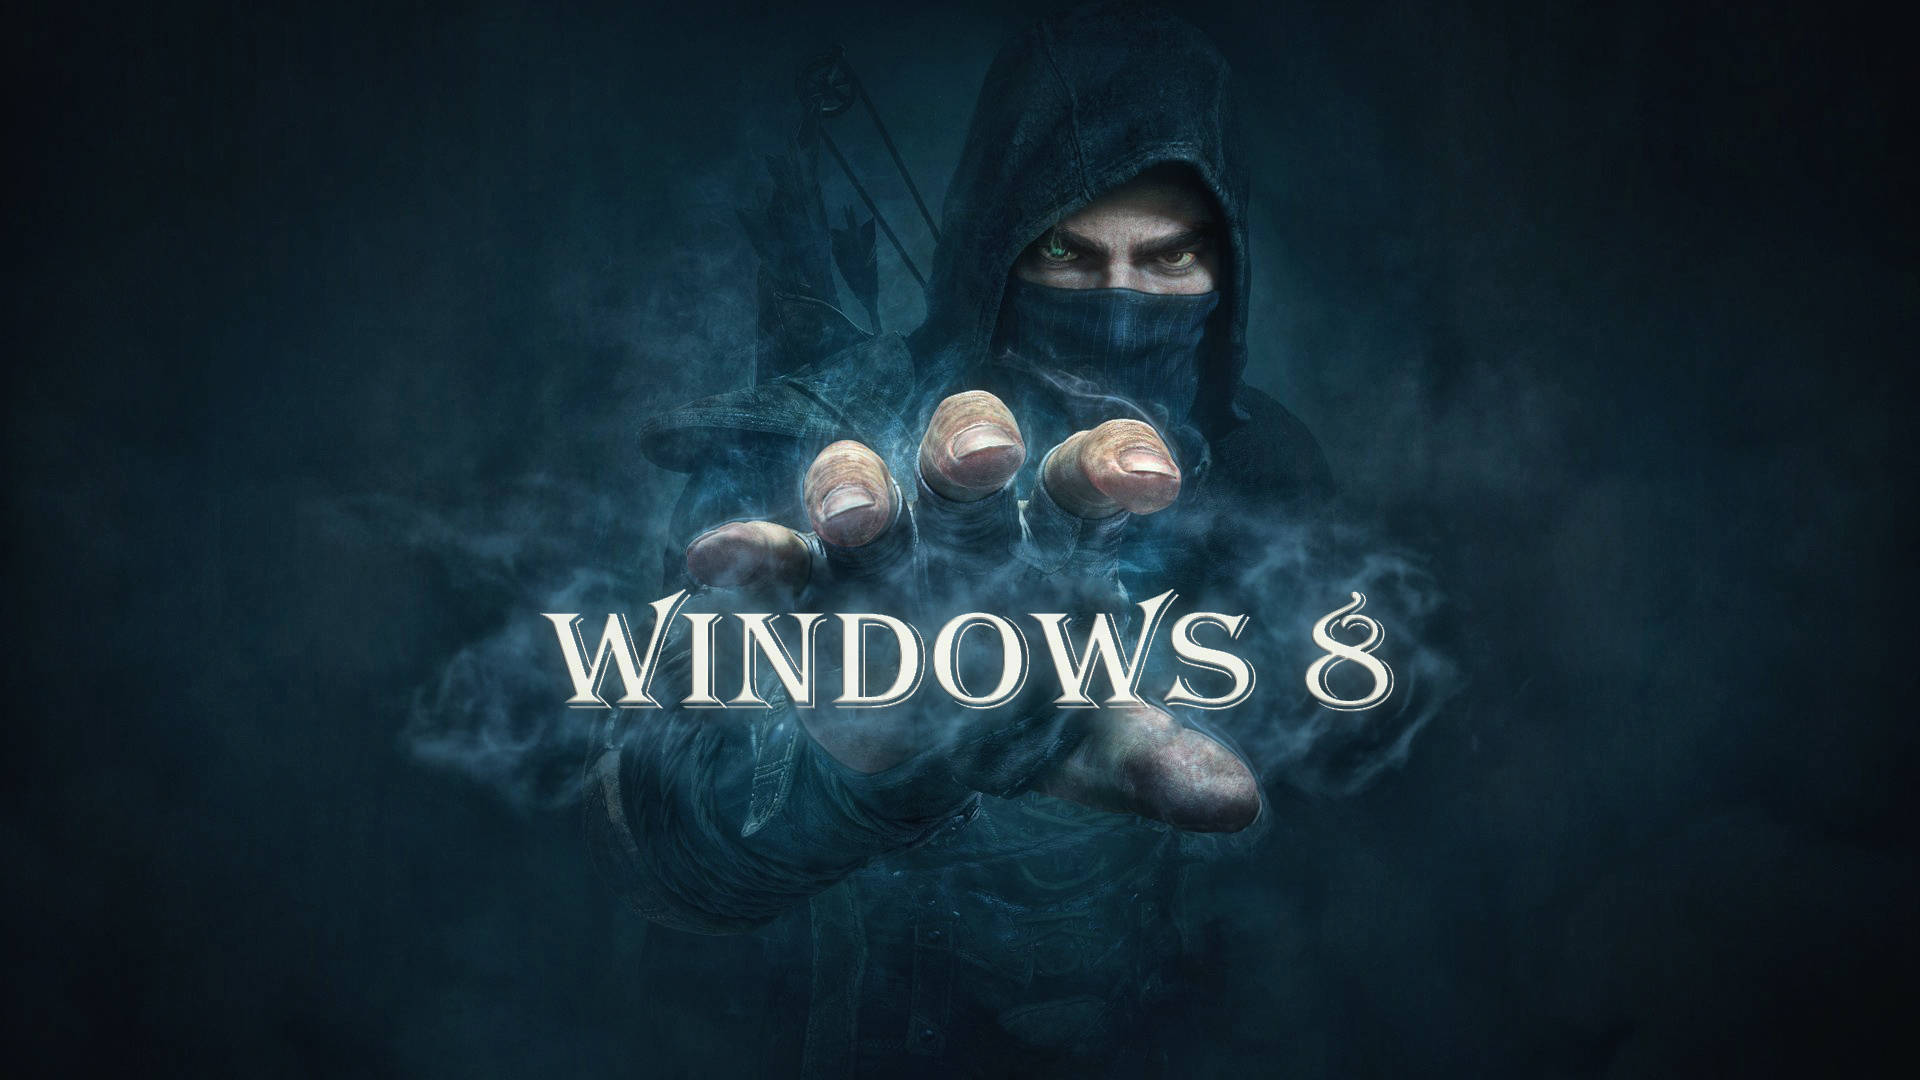 Assassini Windows 8 Bakgrund. Wallpaper